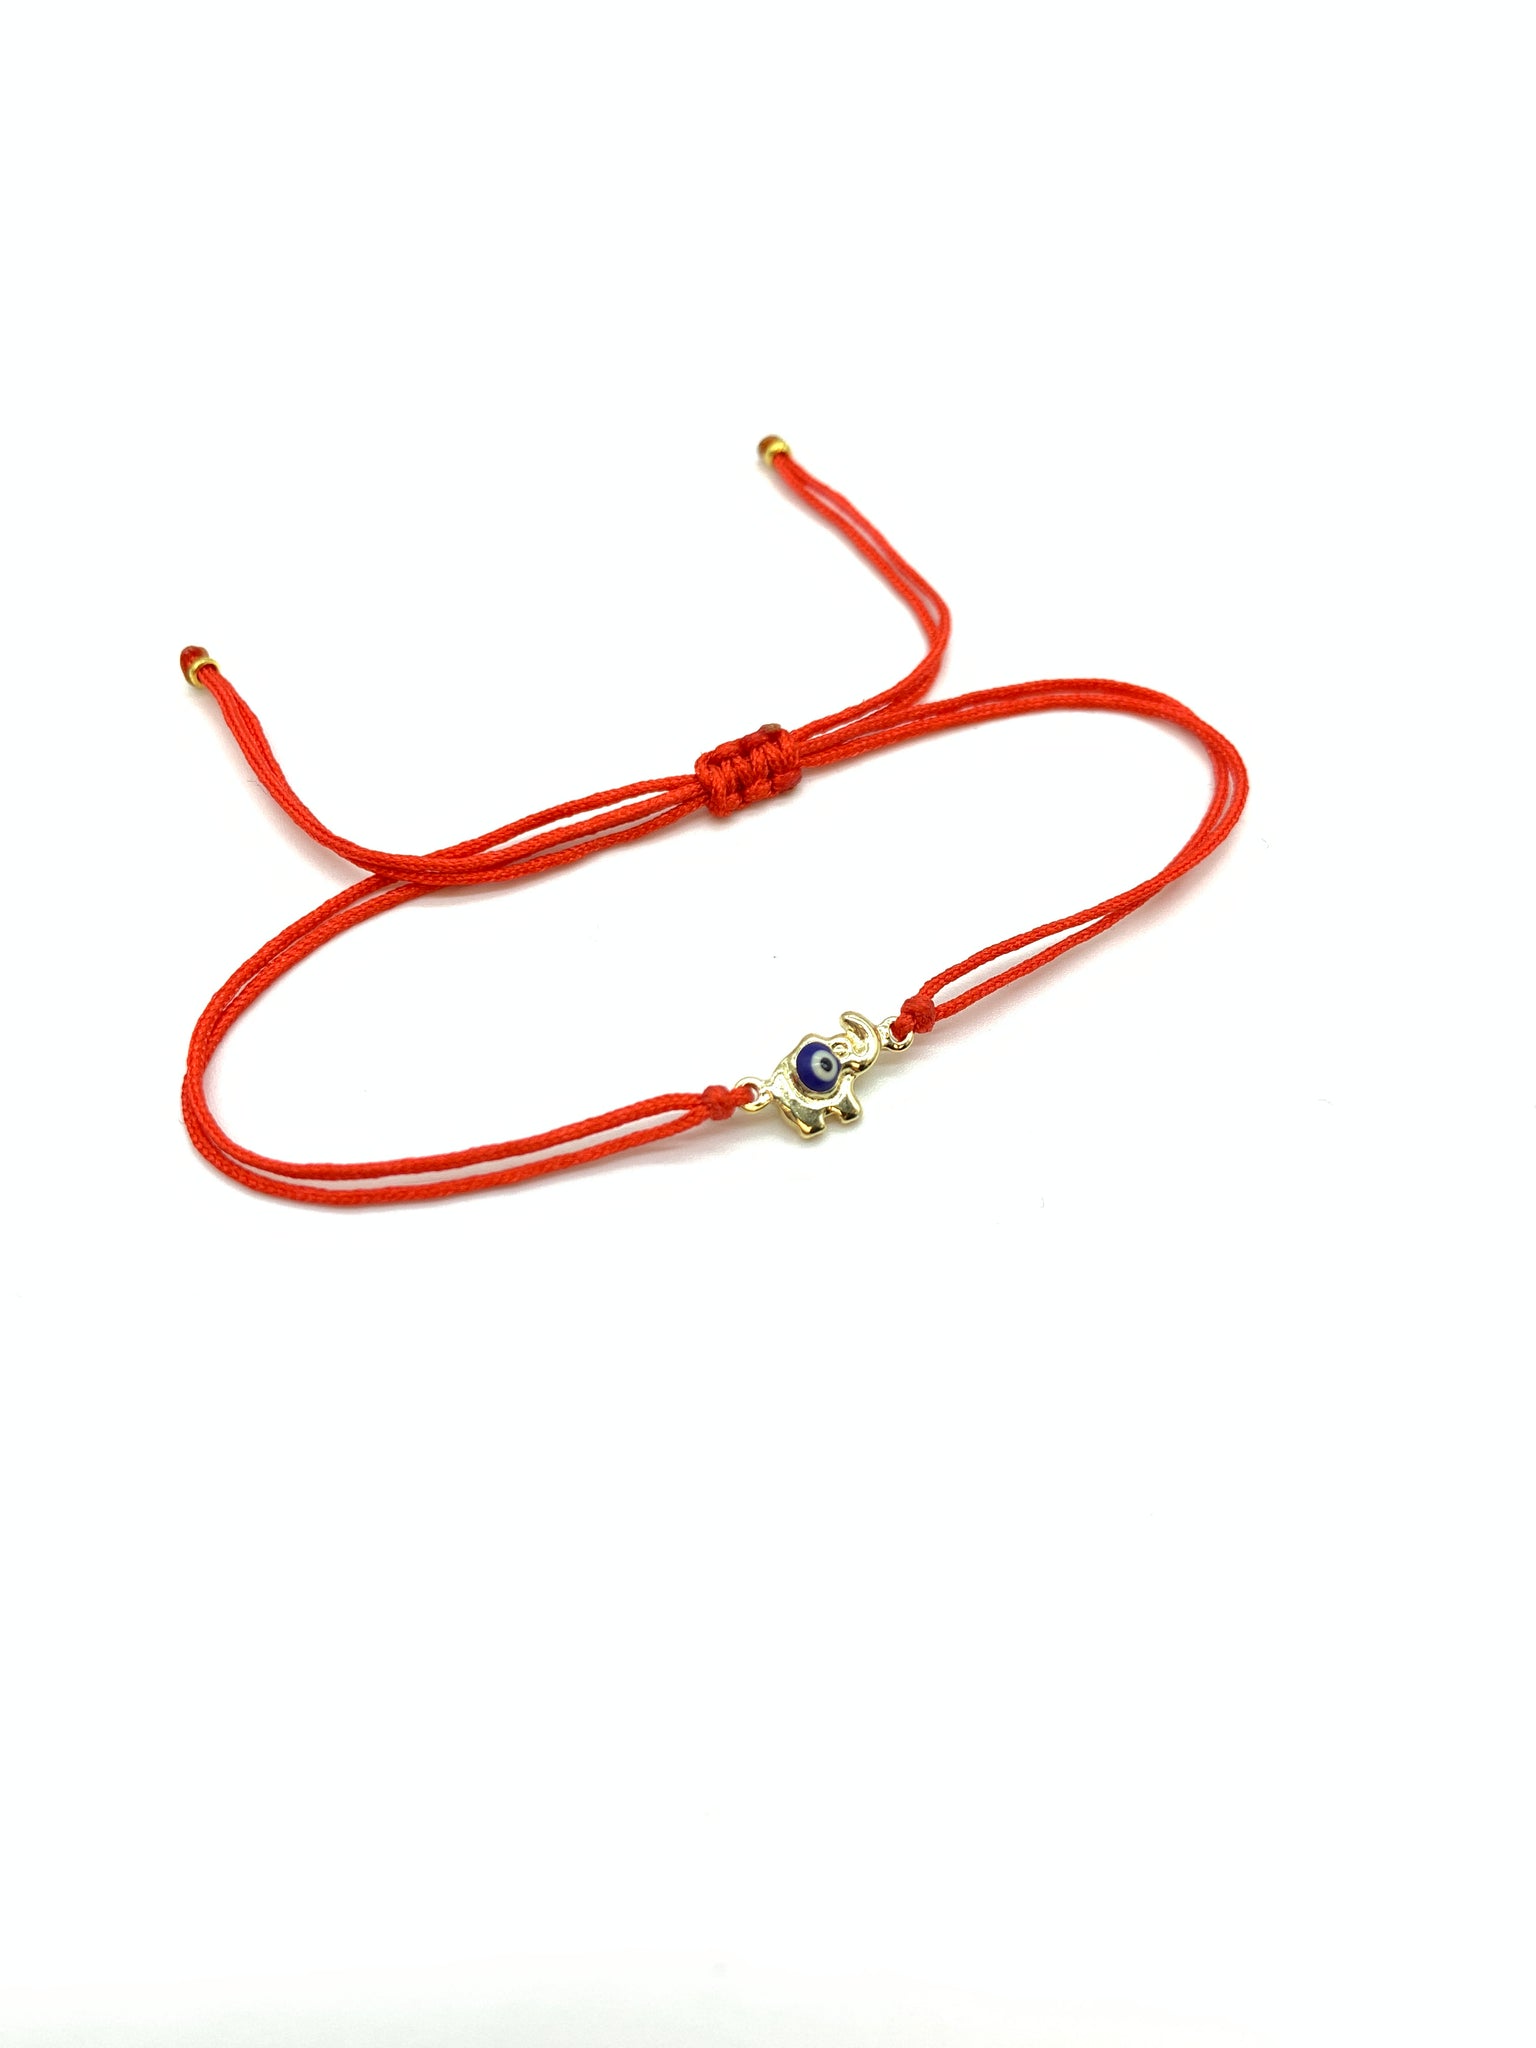 Evil Eye String Bracelet with elephant charm #2914